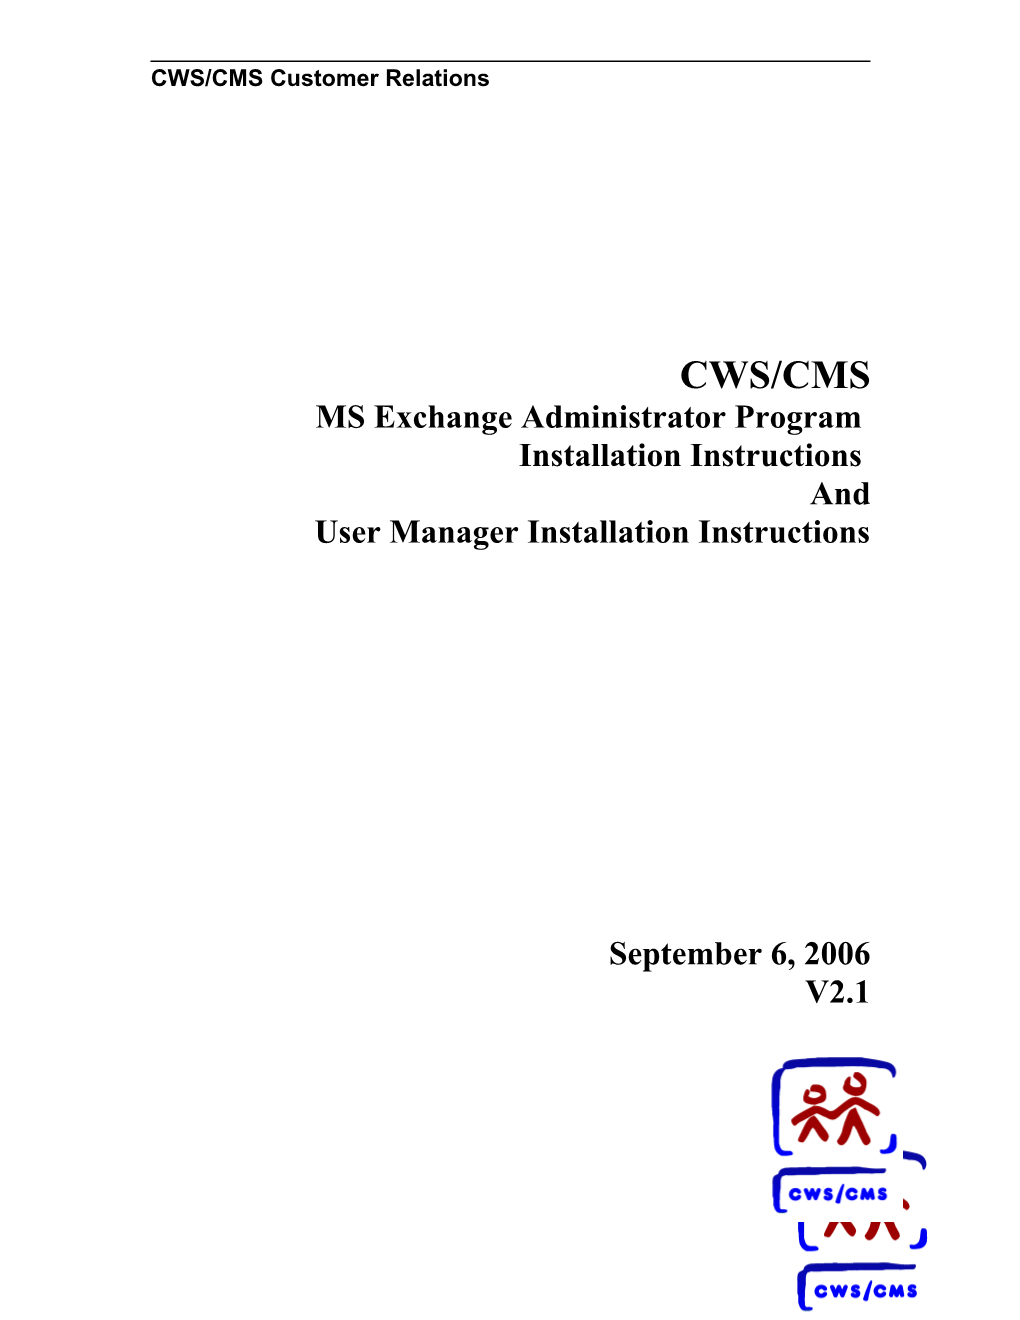 MS Exchange Administrator Program Installation Instructions